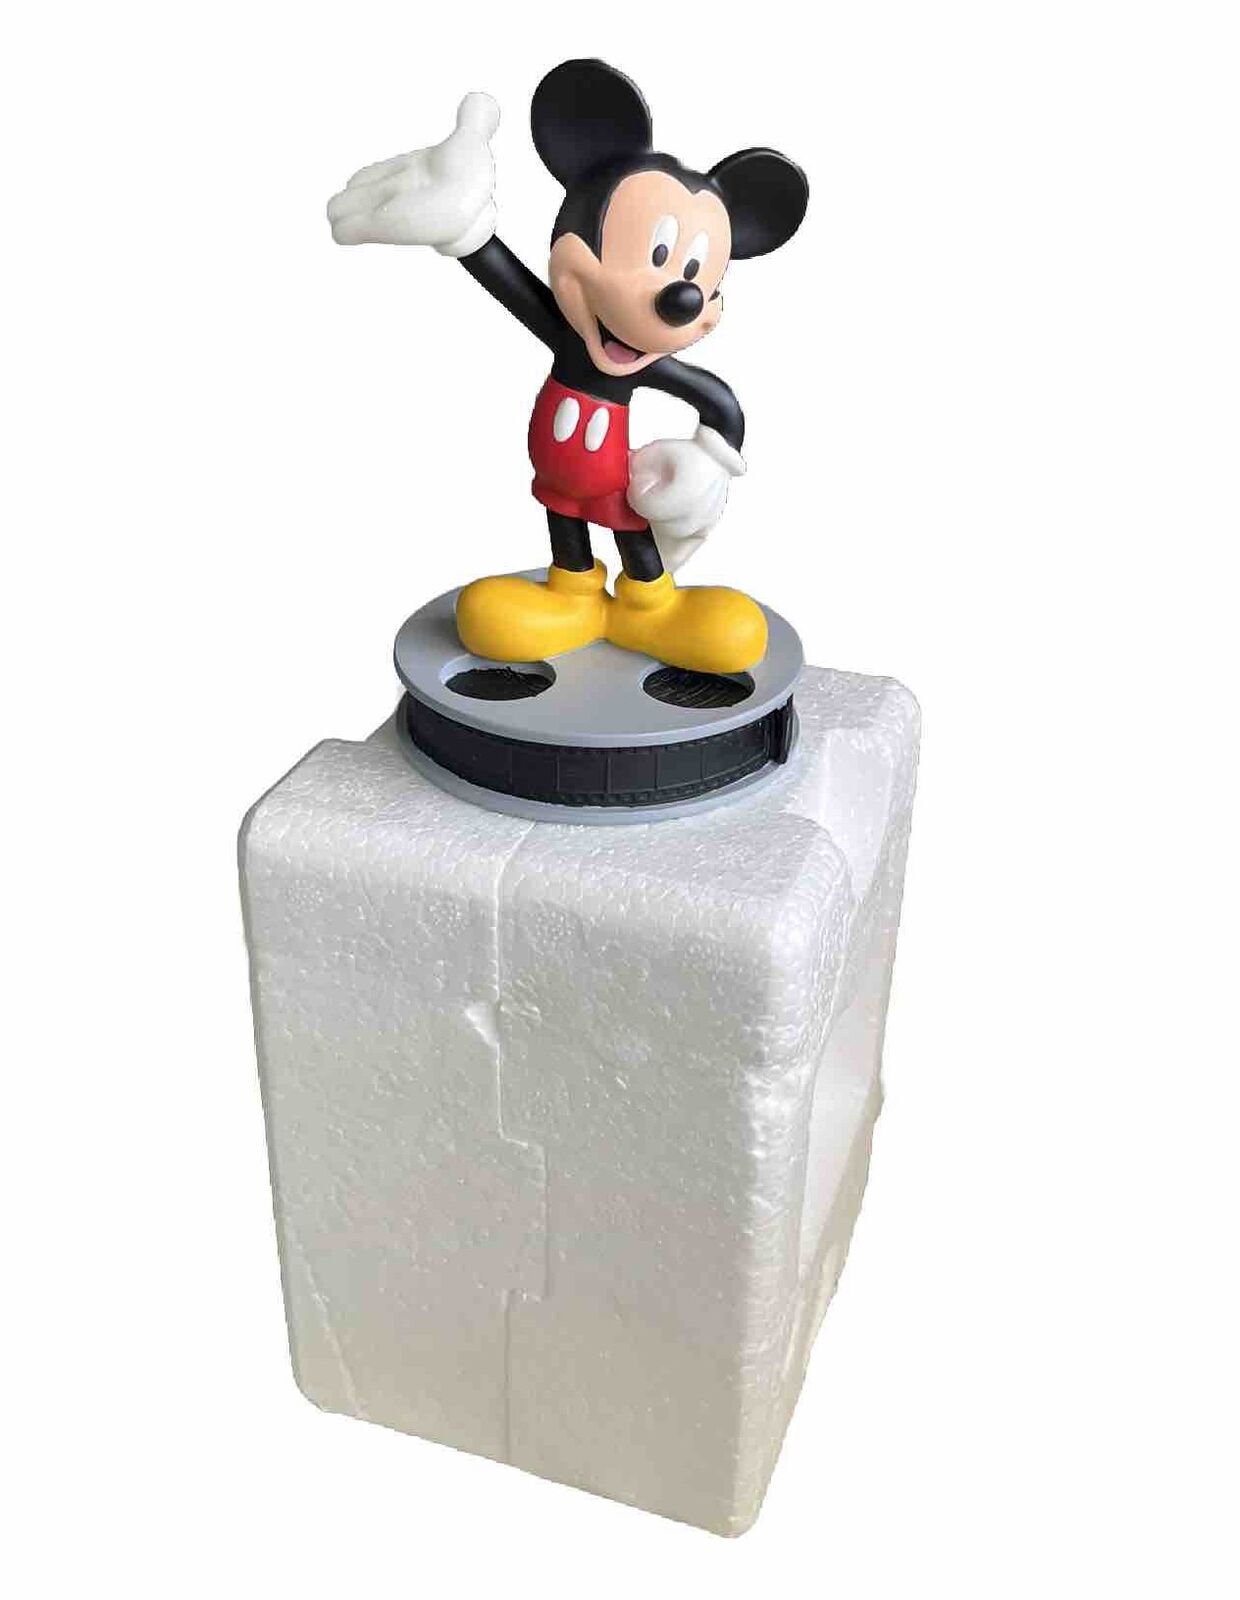 Vintage Mickey Mouse Figurine Standing on Movie Film Reel. Disney 1999